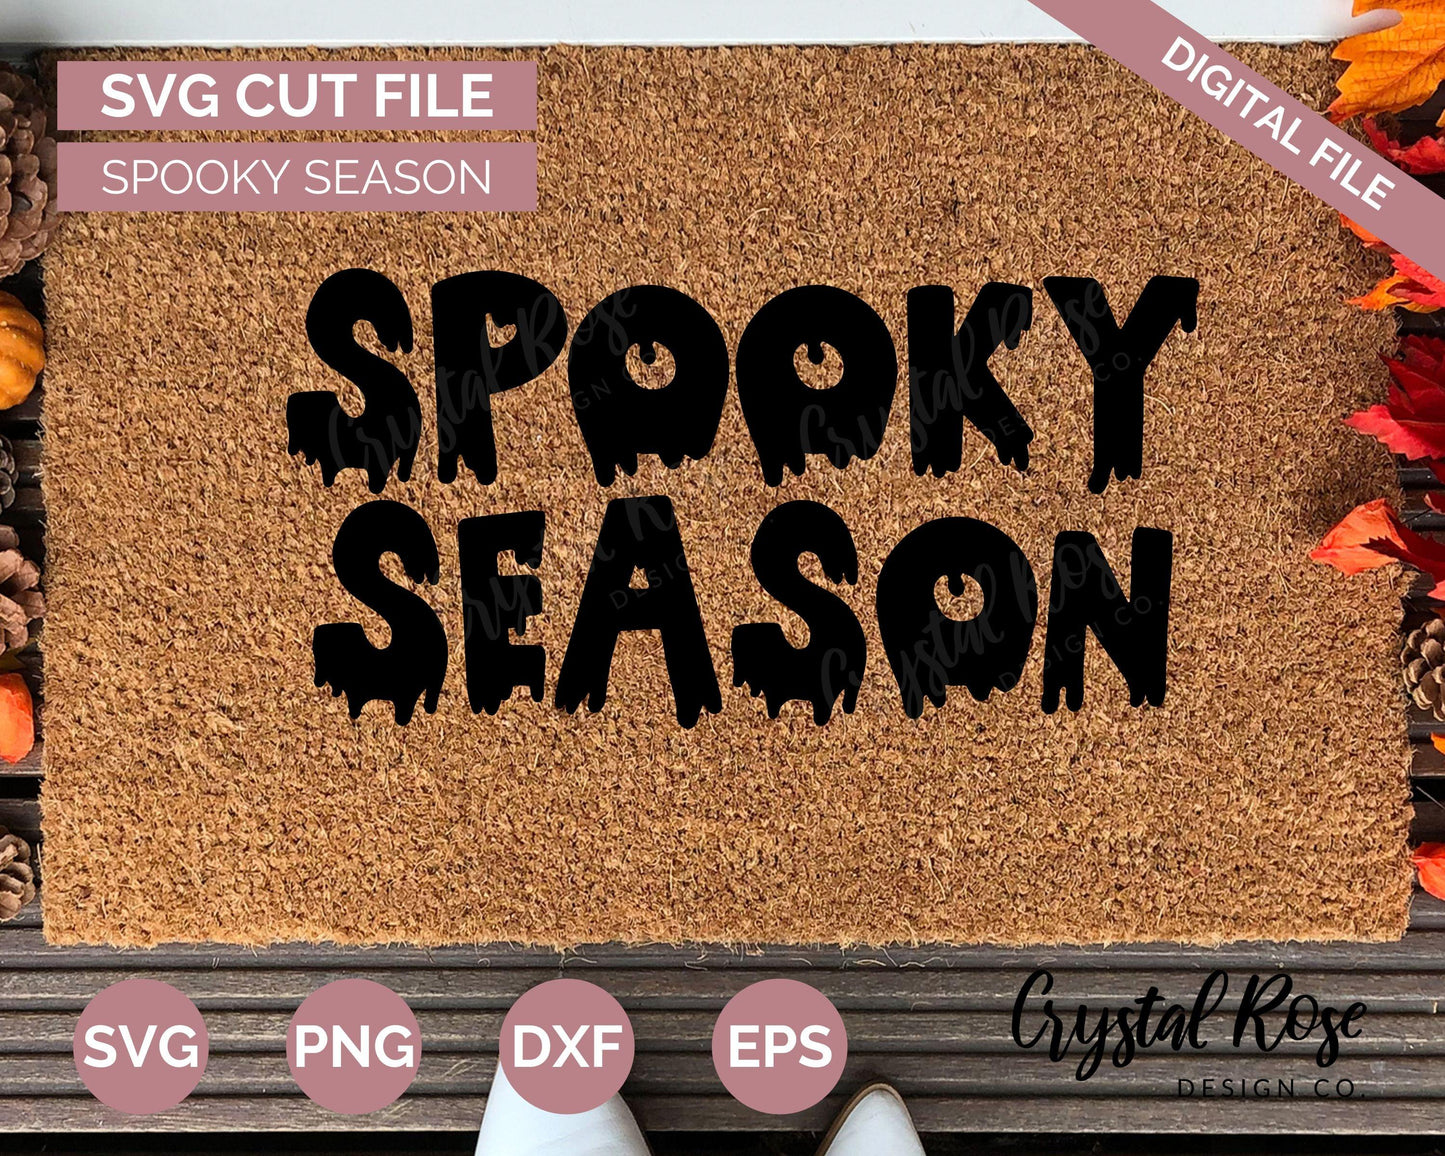 Spooky Season SVG, Halloween SVG, Digital Download, Cricut, Silhouette, Glowforge (includes svg/png/dxf/eps)